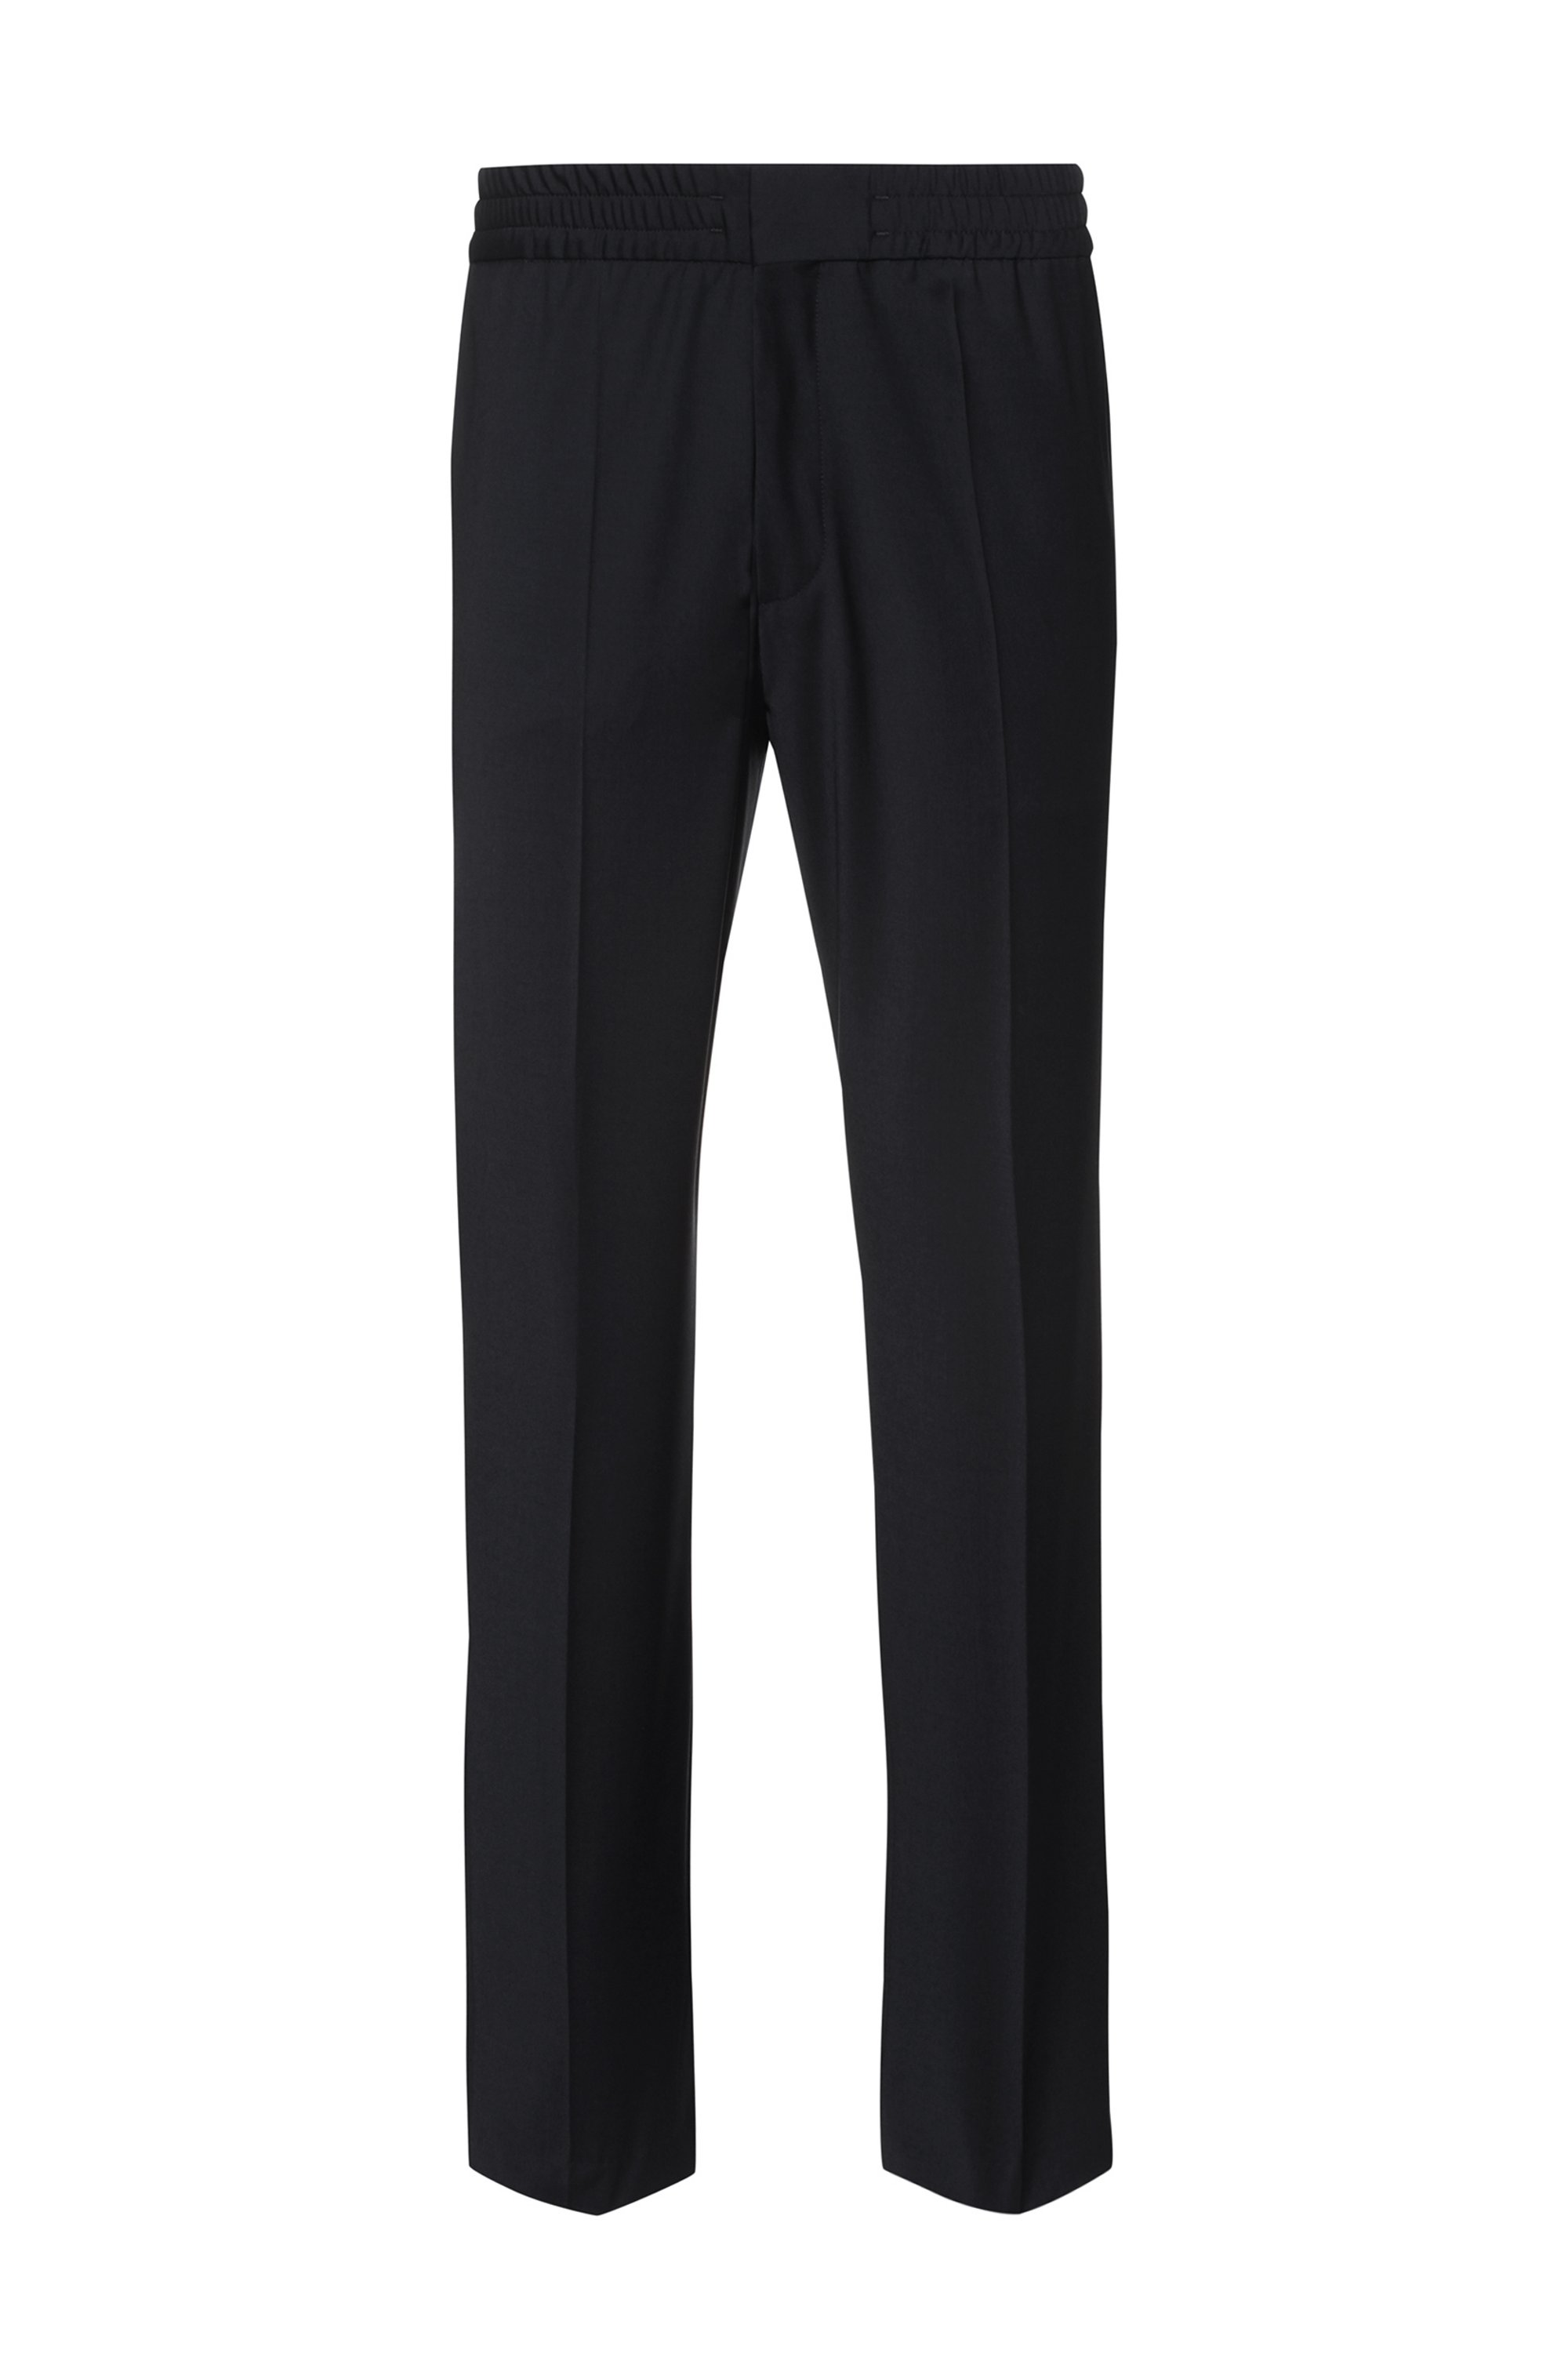 Extra-slim-fit pants in a wool blend, Black